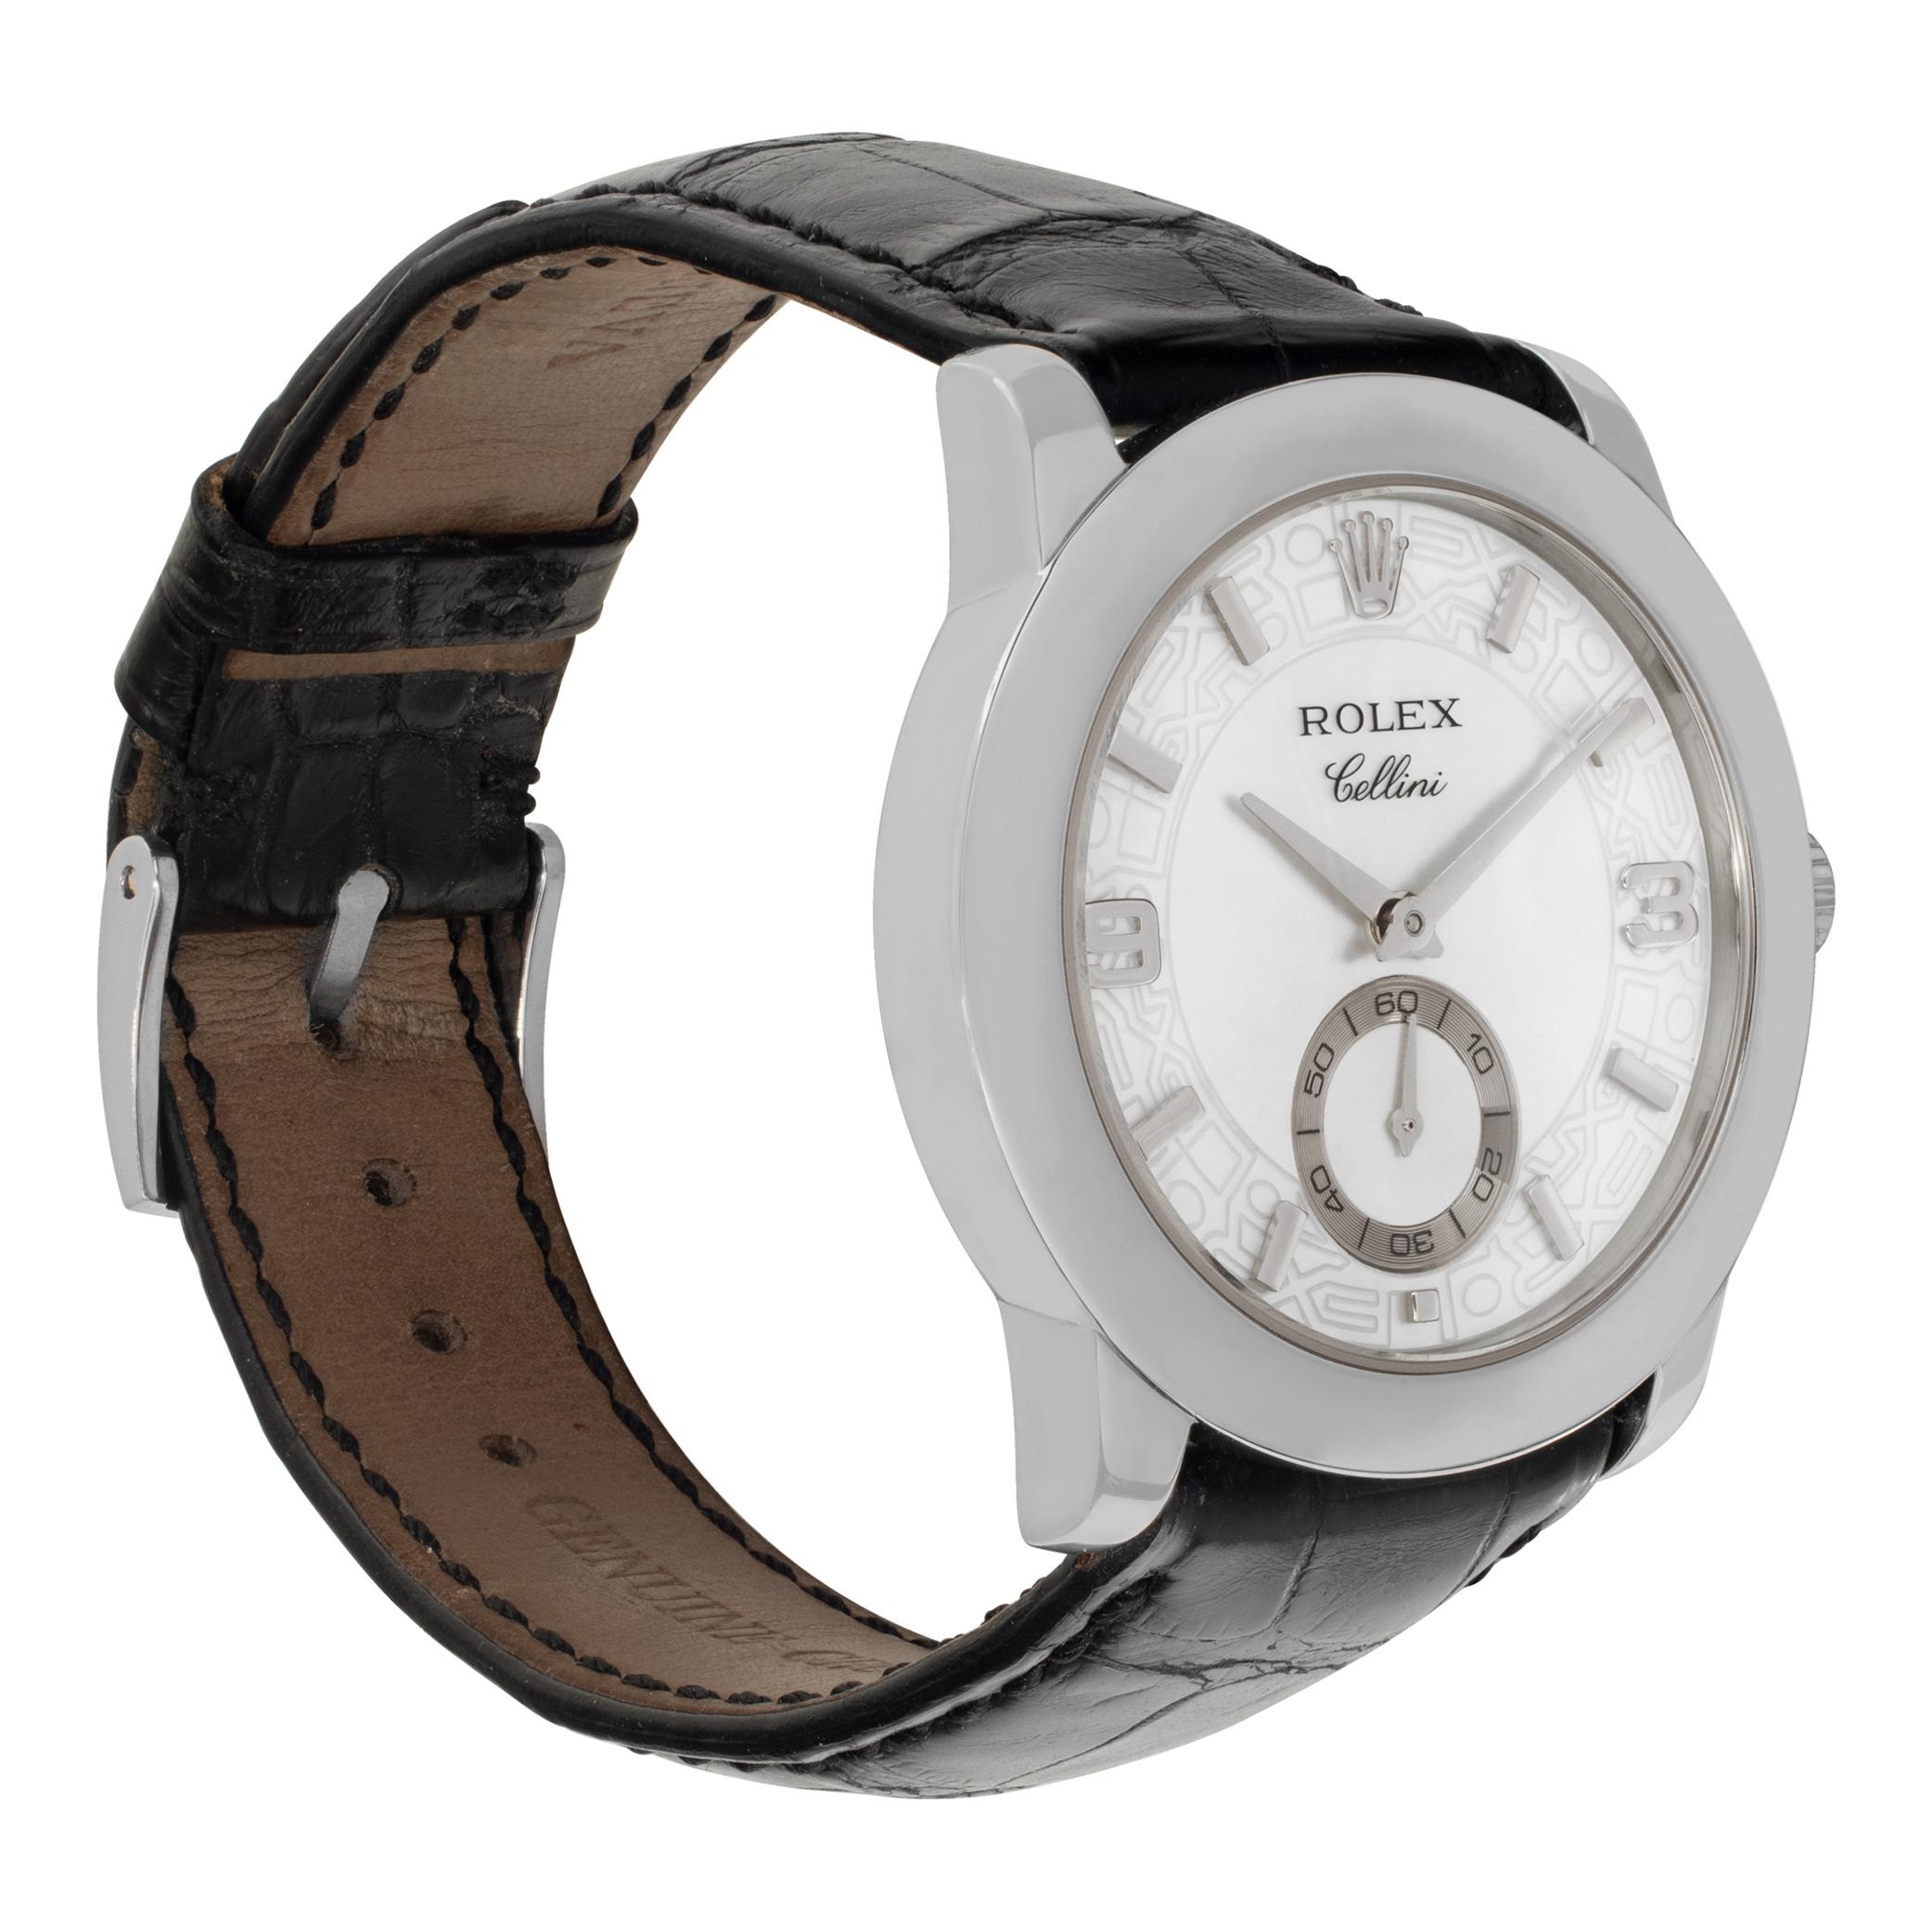 Rolex Cellini platinum Manual Wristwatch Ref 5240 In Excellent Condition For Sale In Surfside, FL